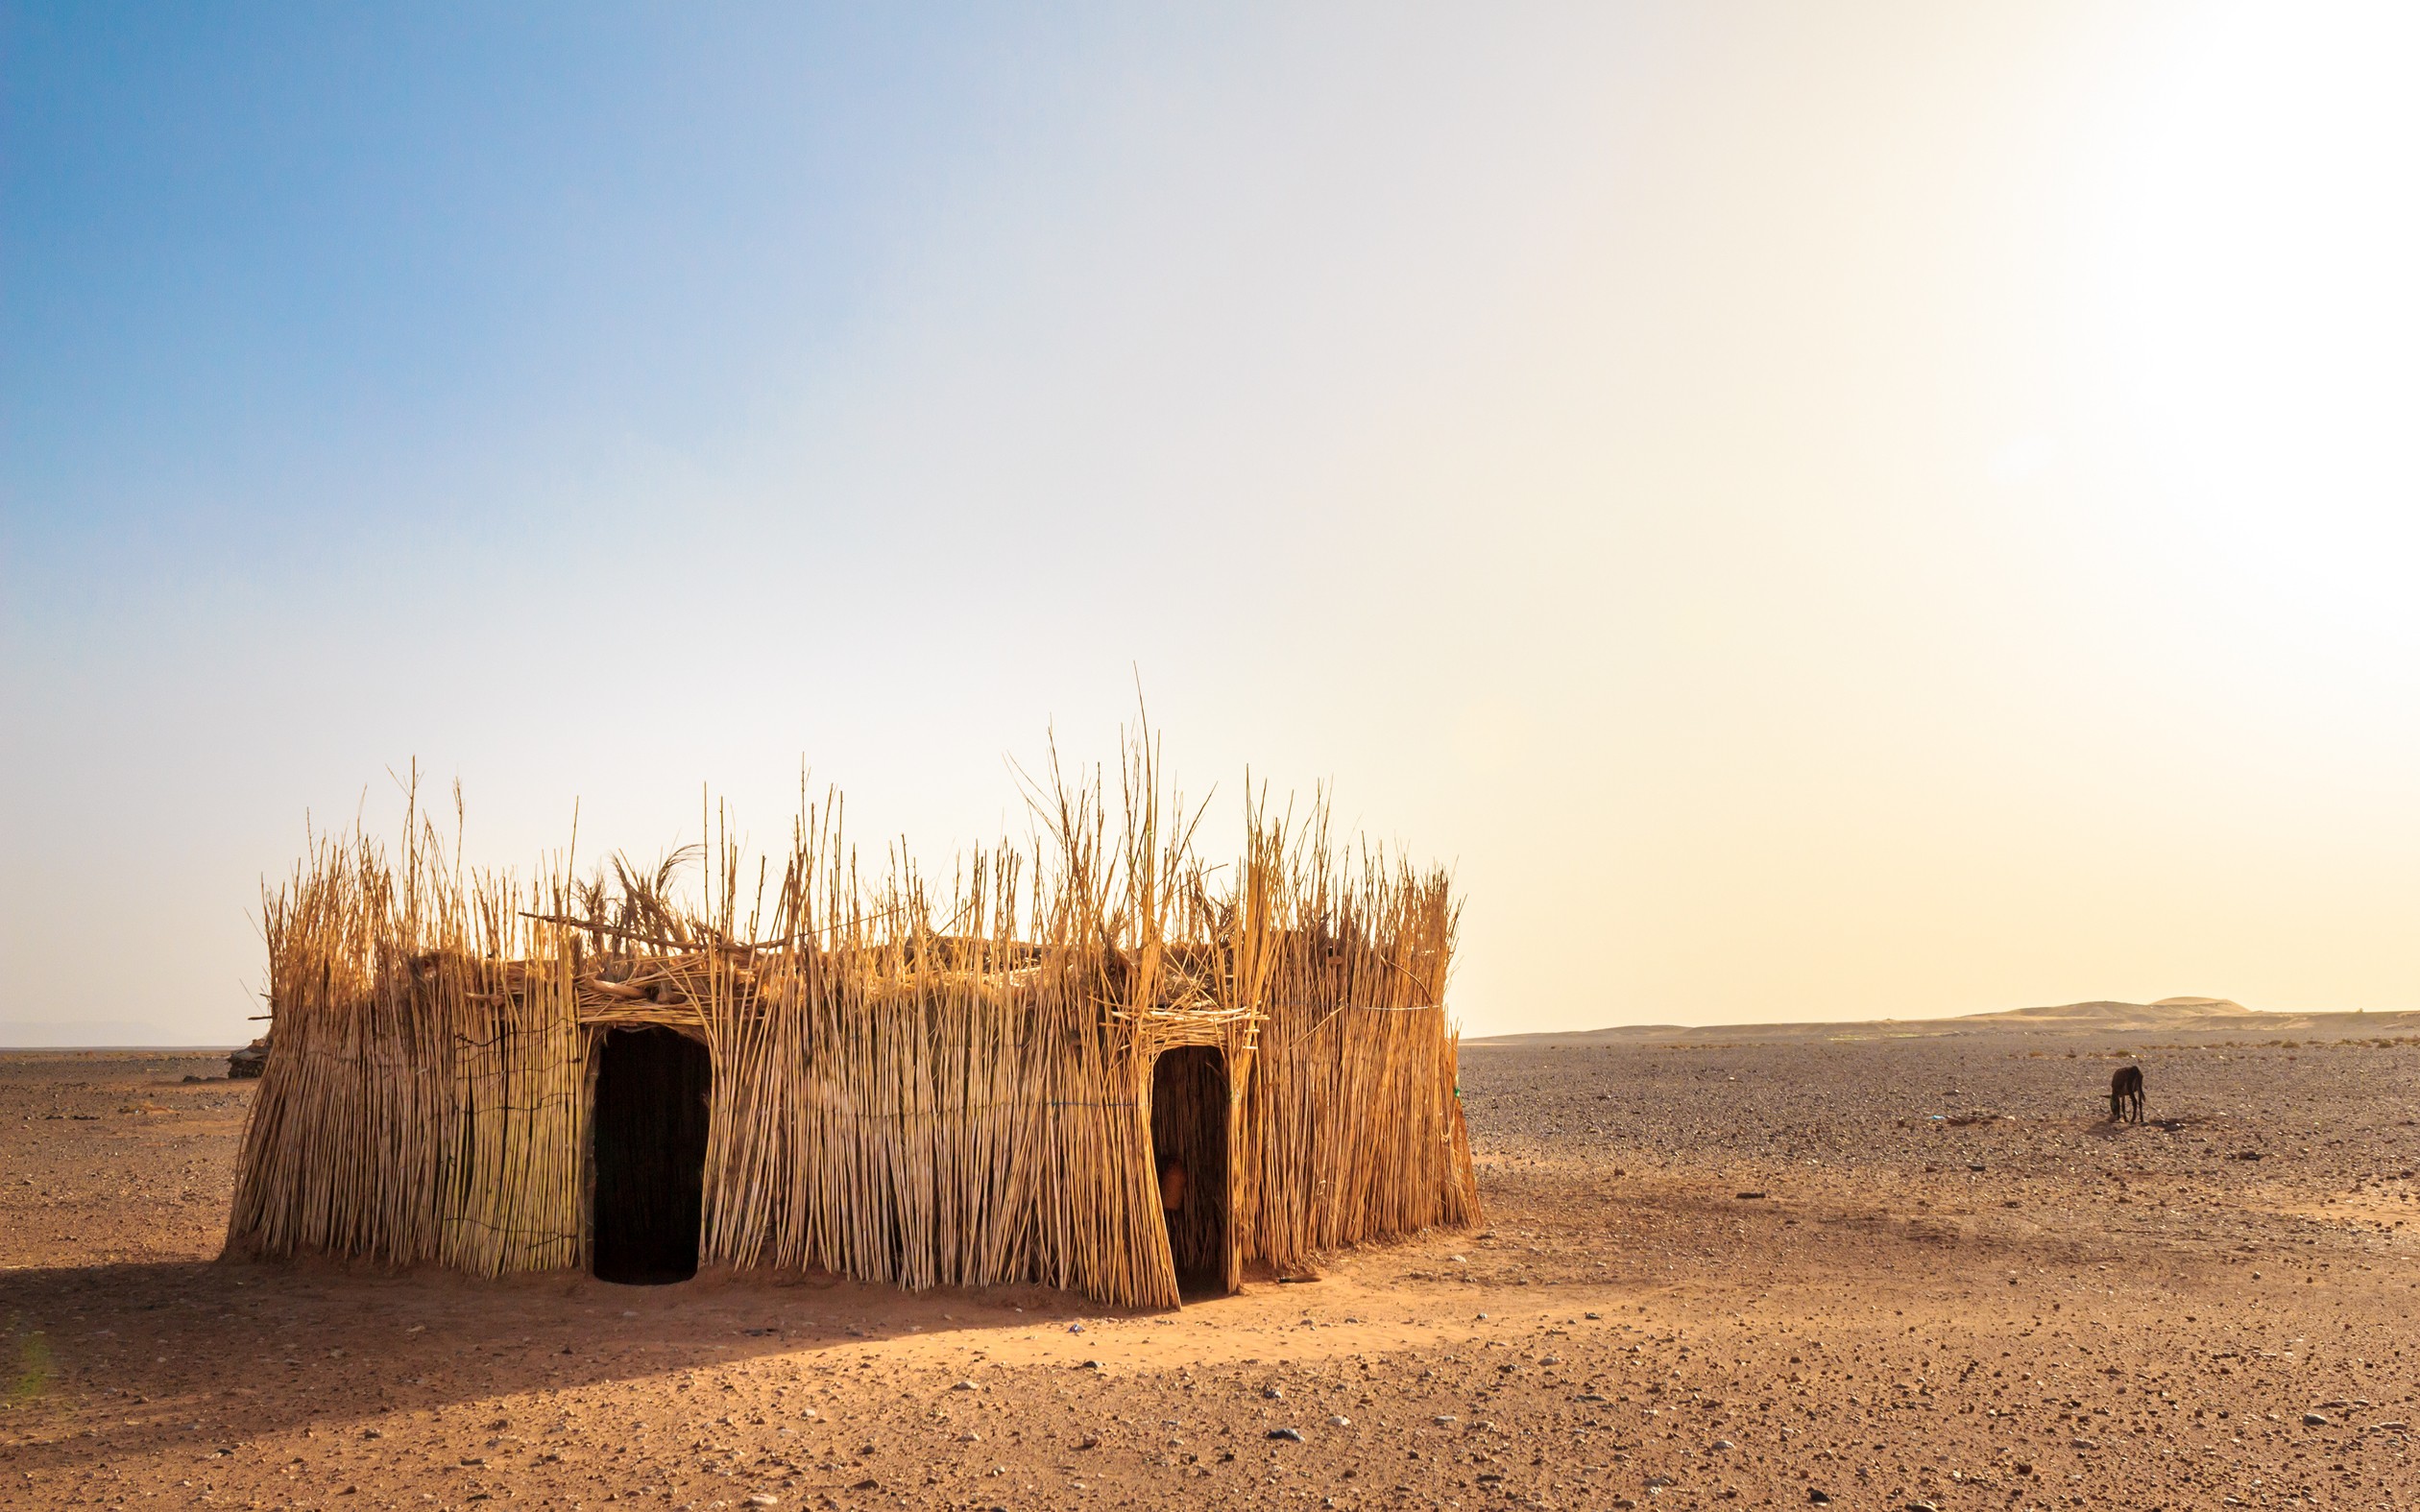 General 2520x1575 landscape Sahara desert hut sand clear sky Africa